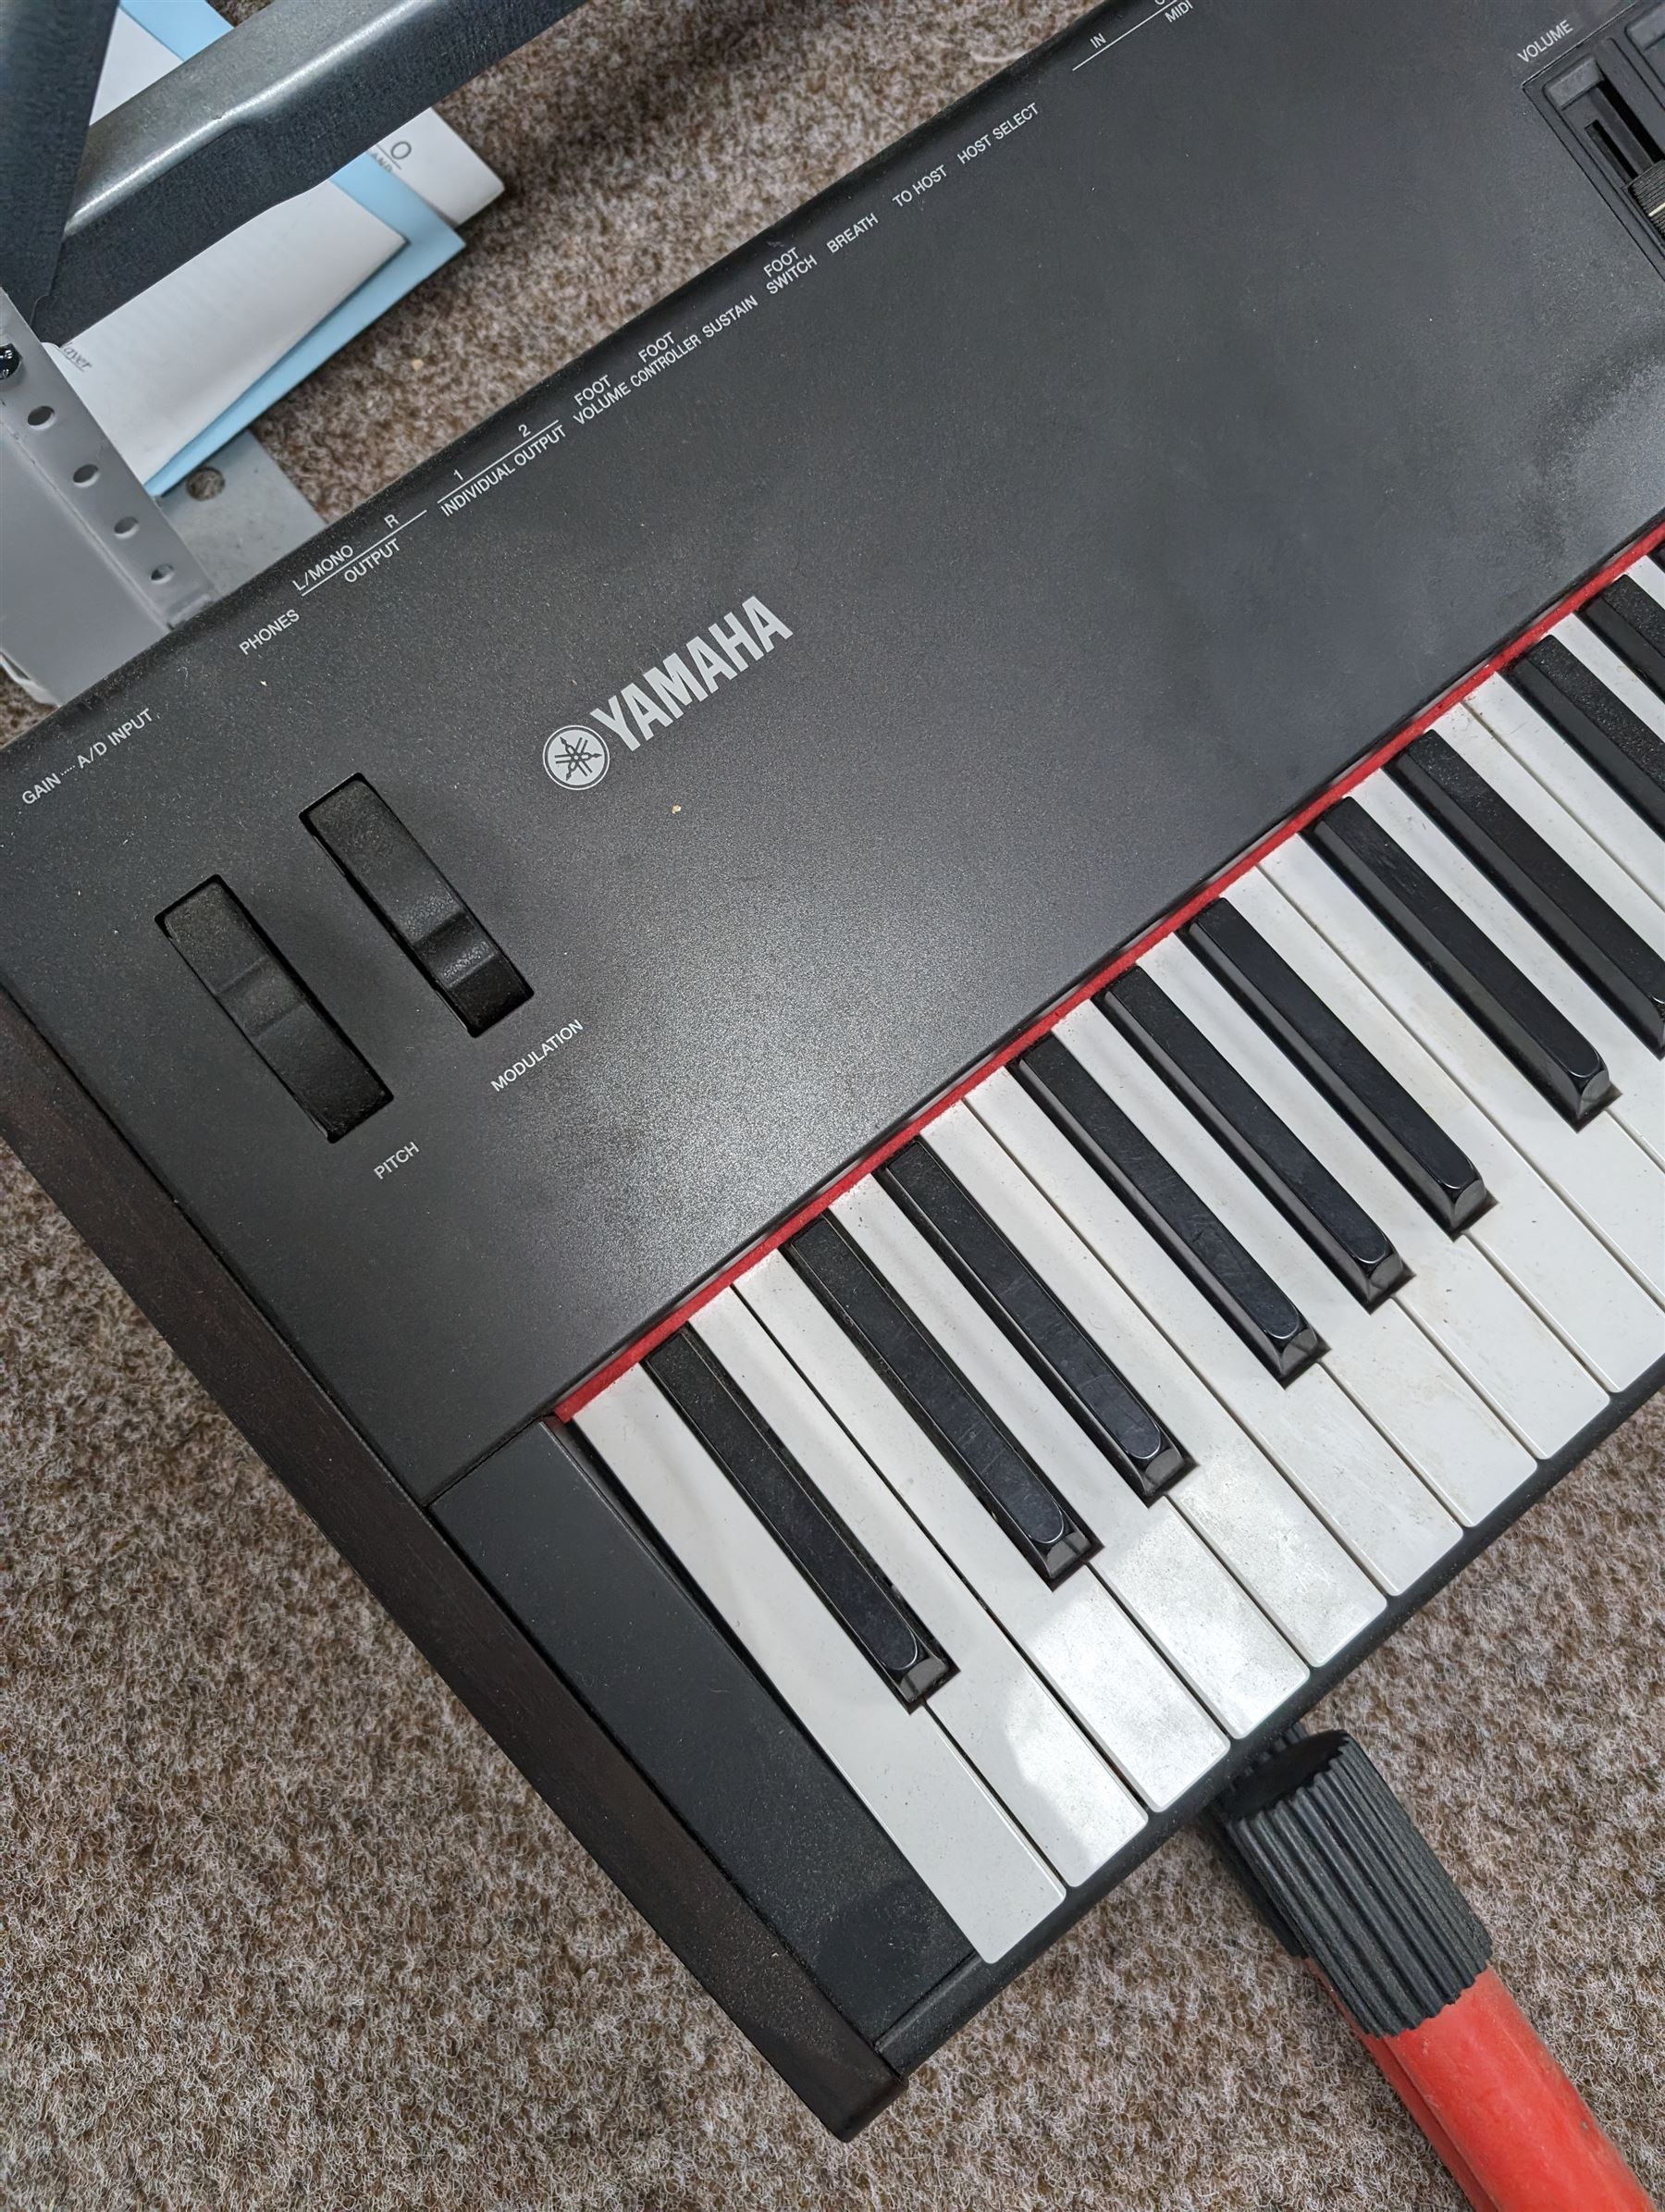 Yamaha S80 keyboard - Image 2 of 3